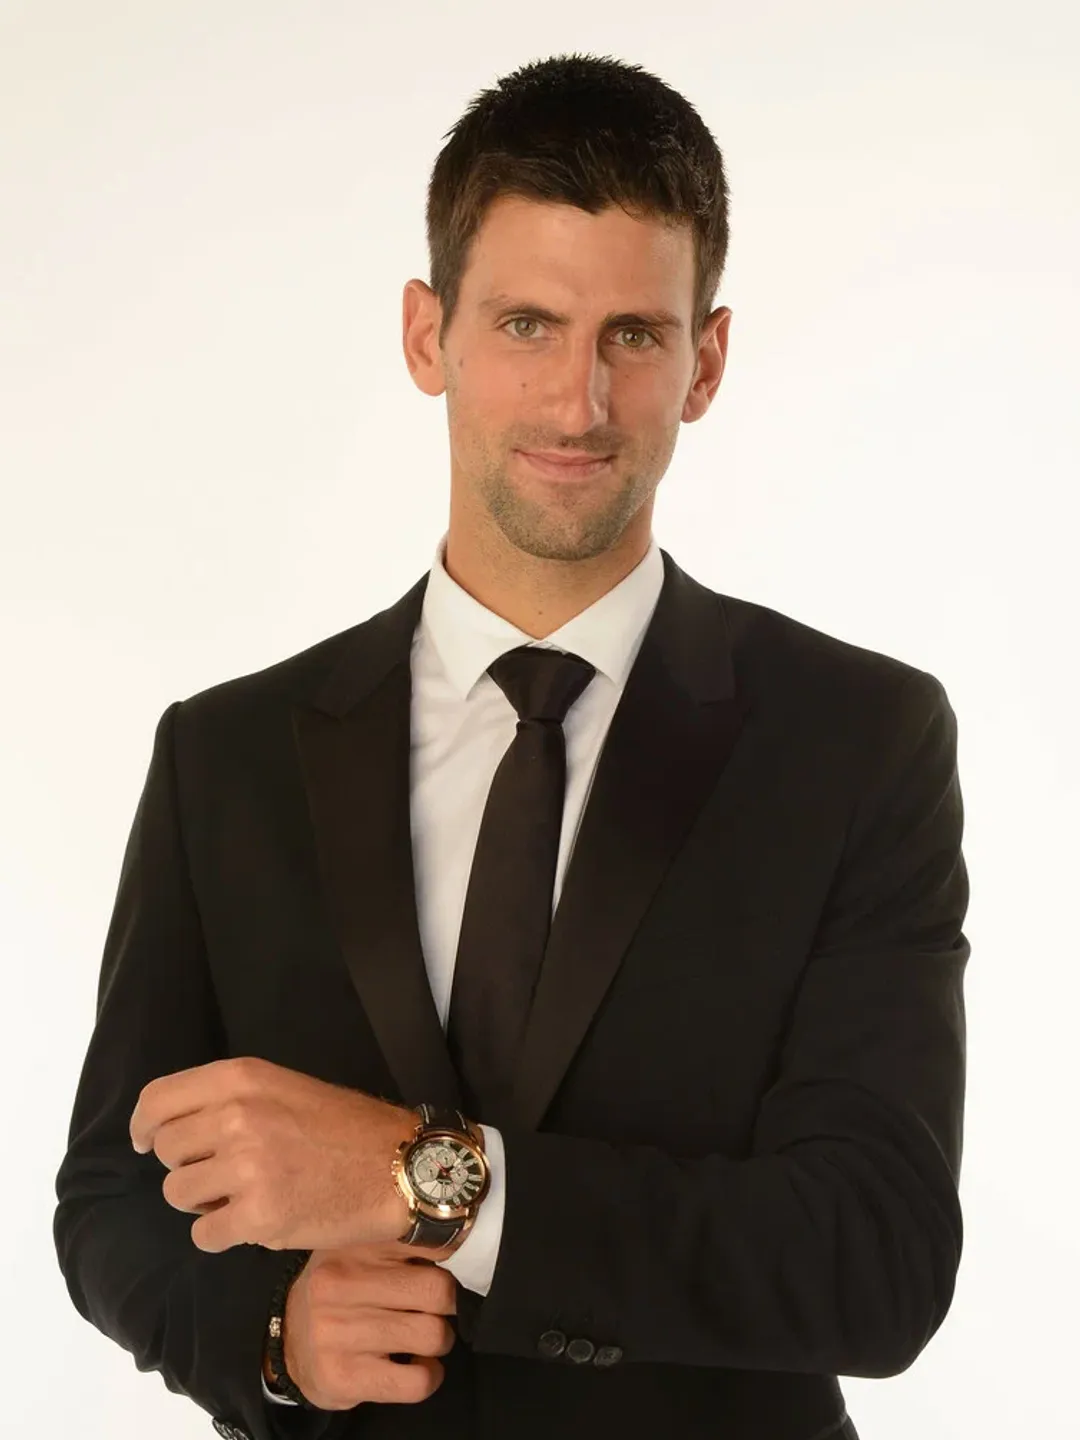 Novak Djokovic early life